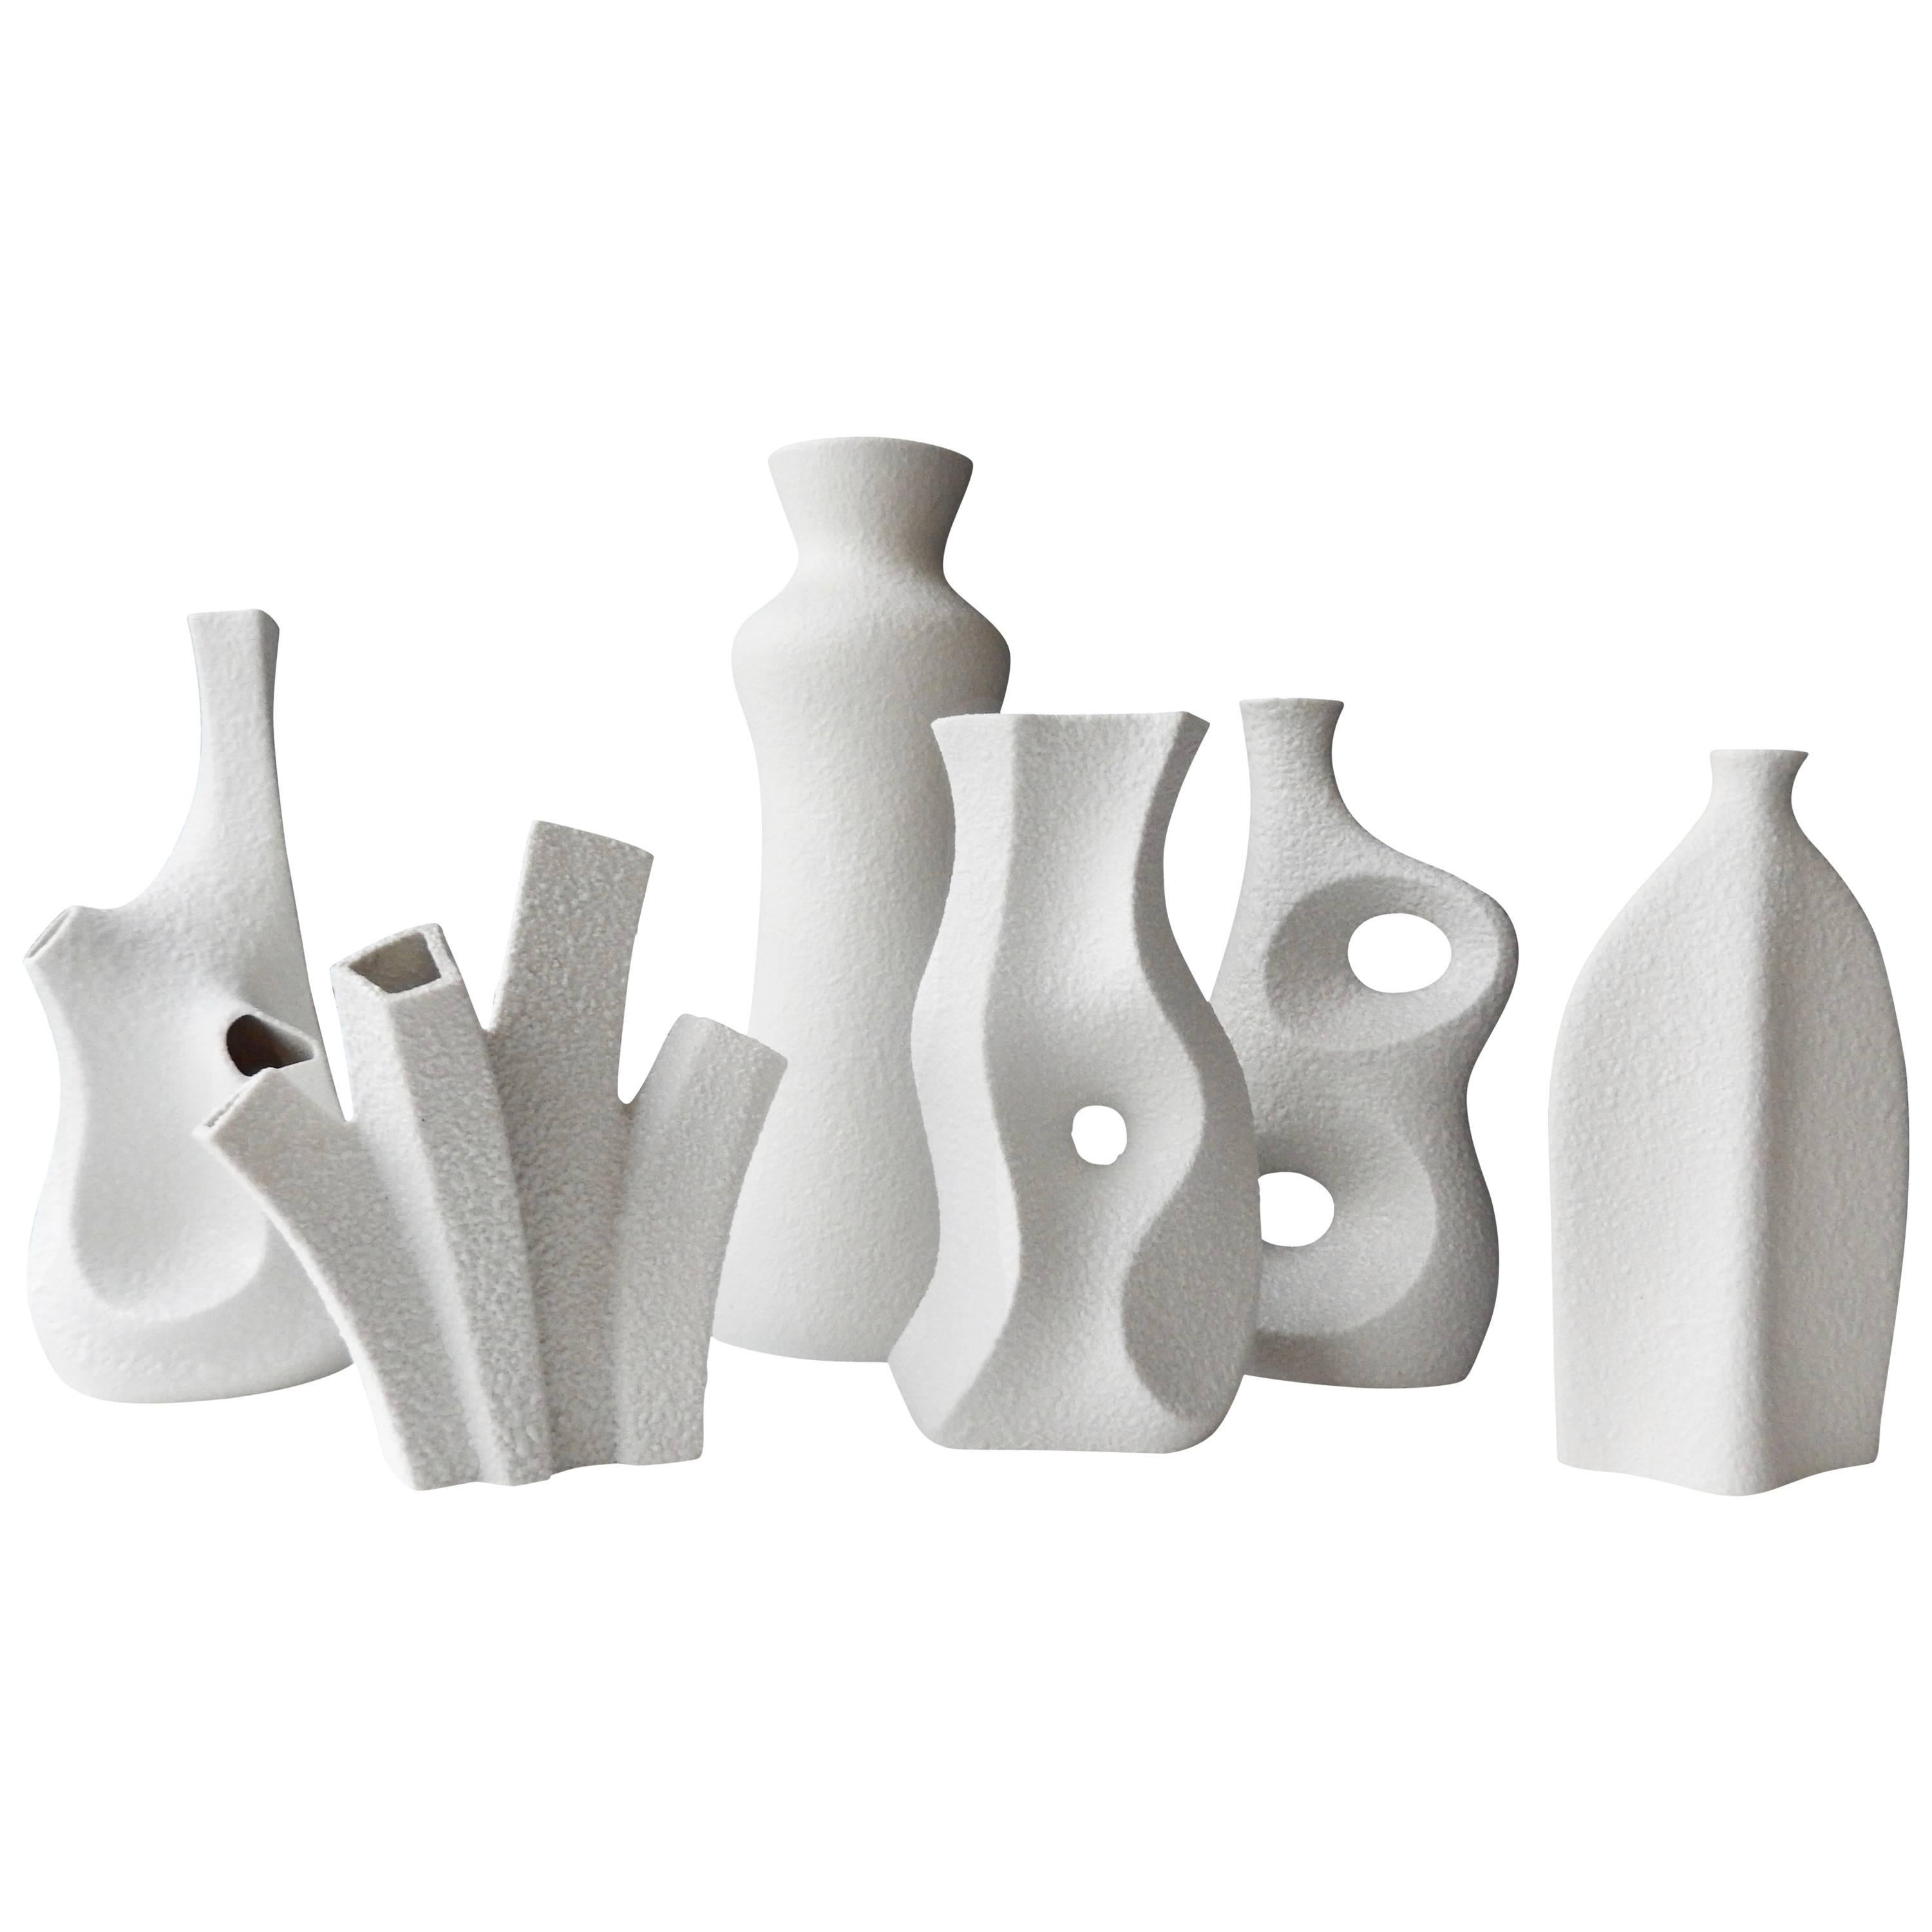 1960s Group of Sgrafo Modern Korallenform Vases, Peter Muller, Germany